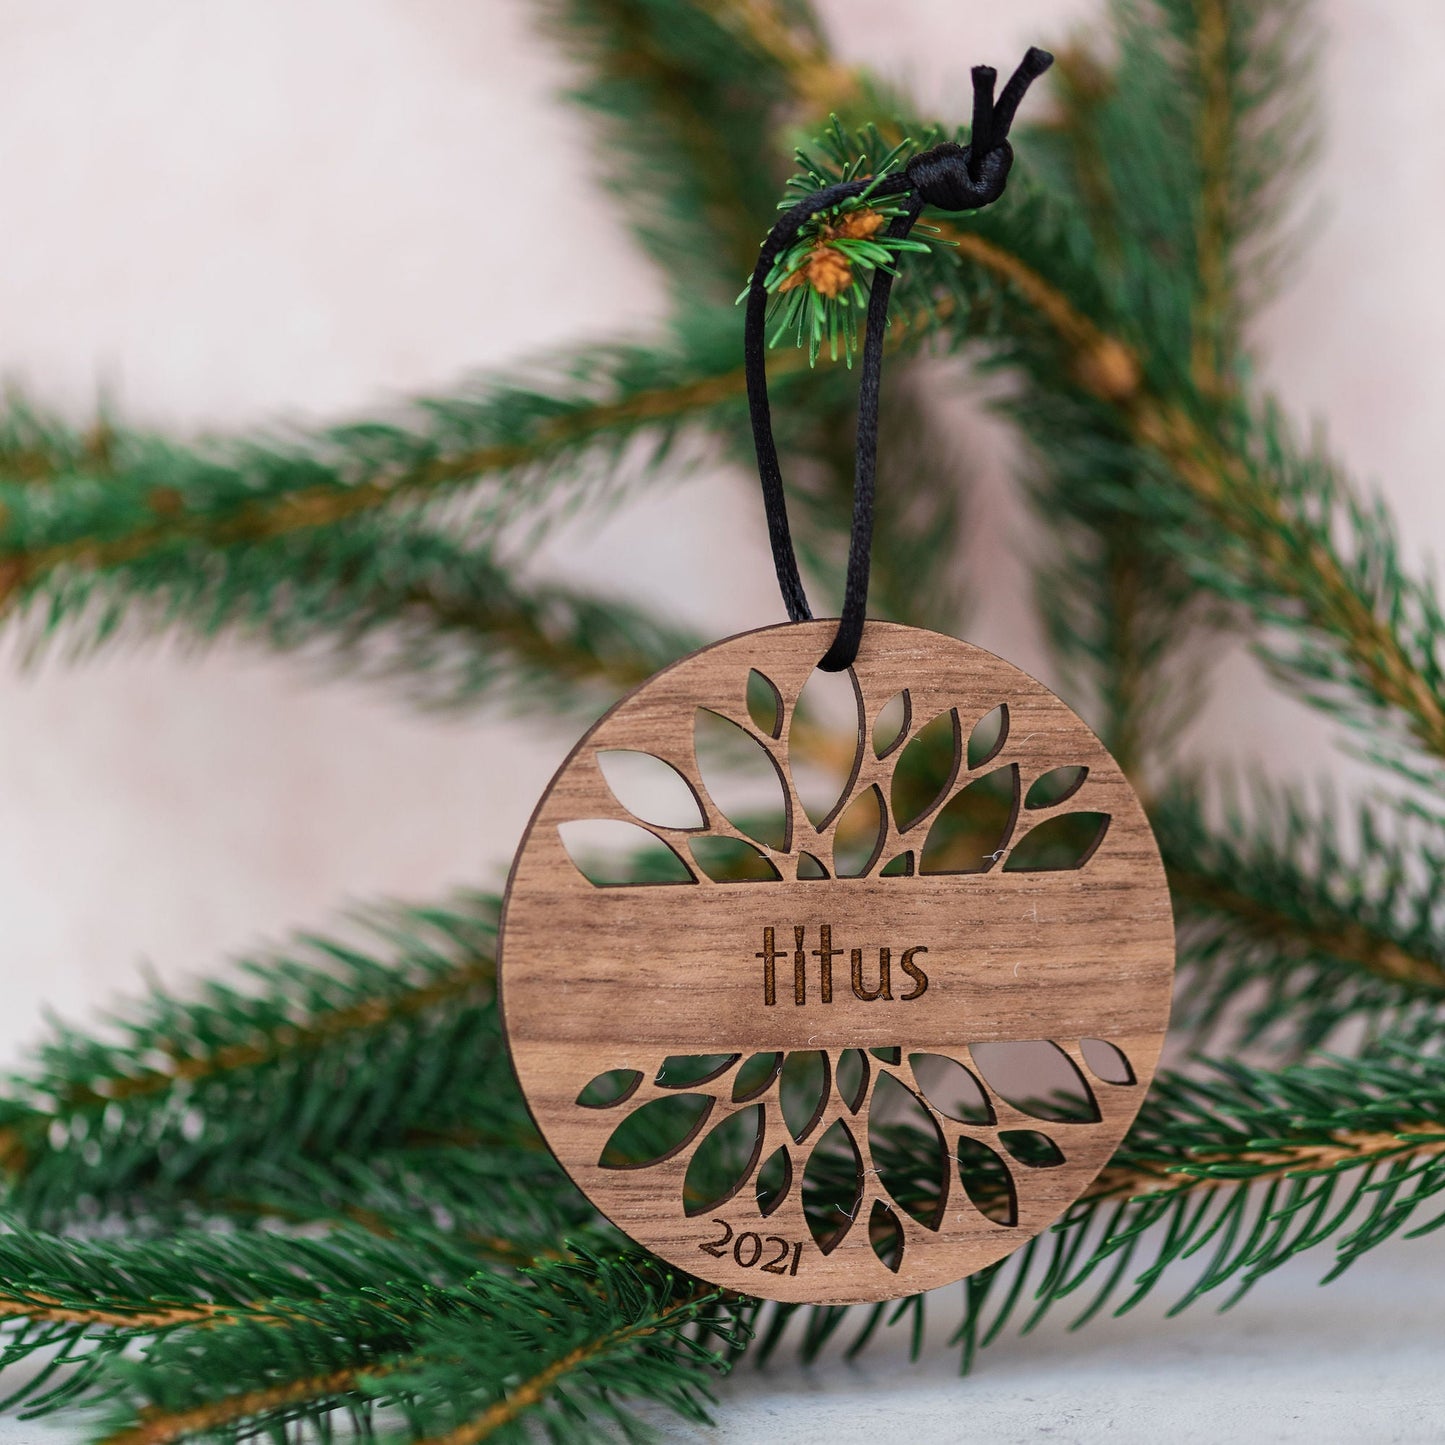 Custom Wood Ornaments: Flower Design - Laser Cut and Laser Engraved Walnut Wood by LeeMo Designs in Bend, Oregon